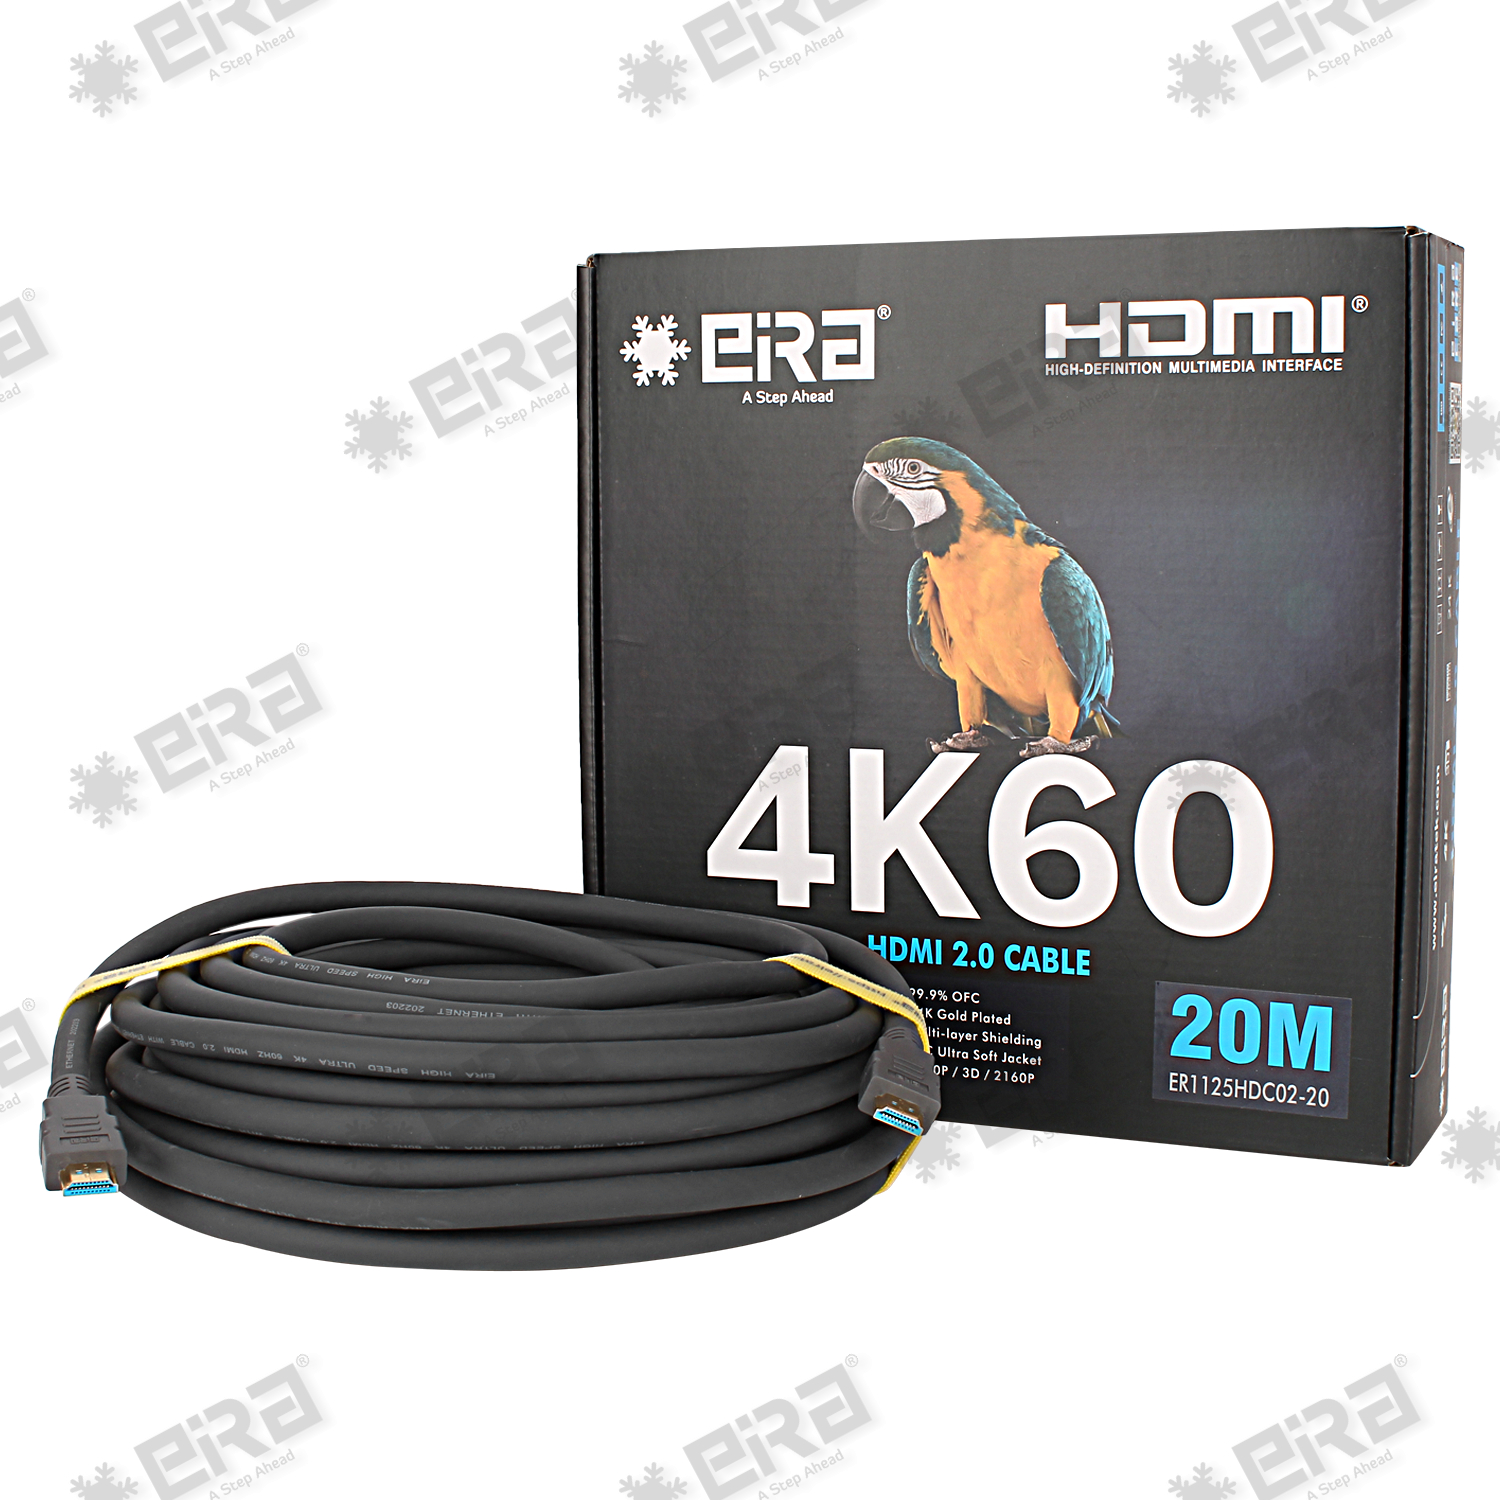 CABLE HDMI 20M